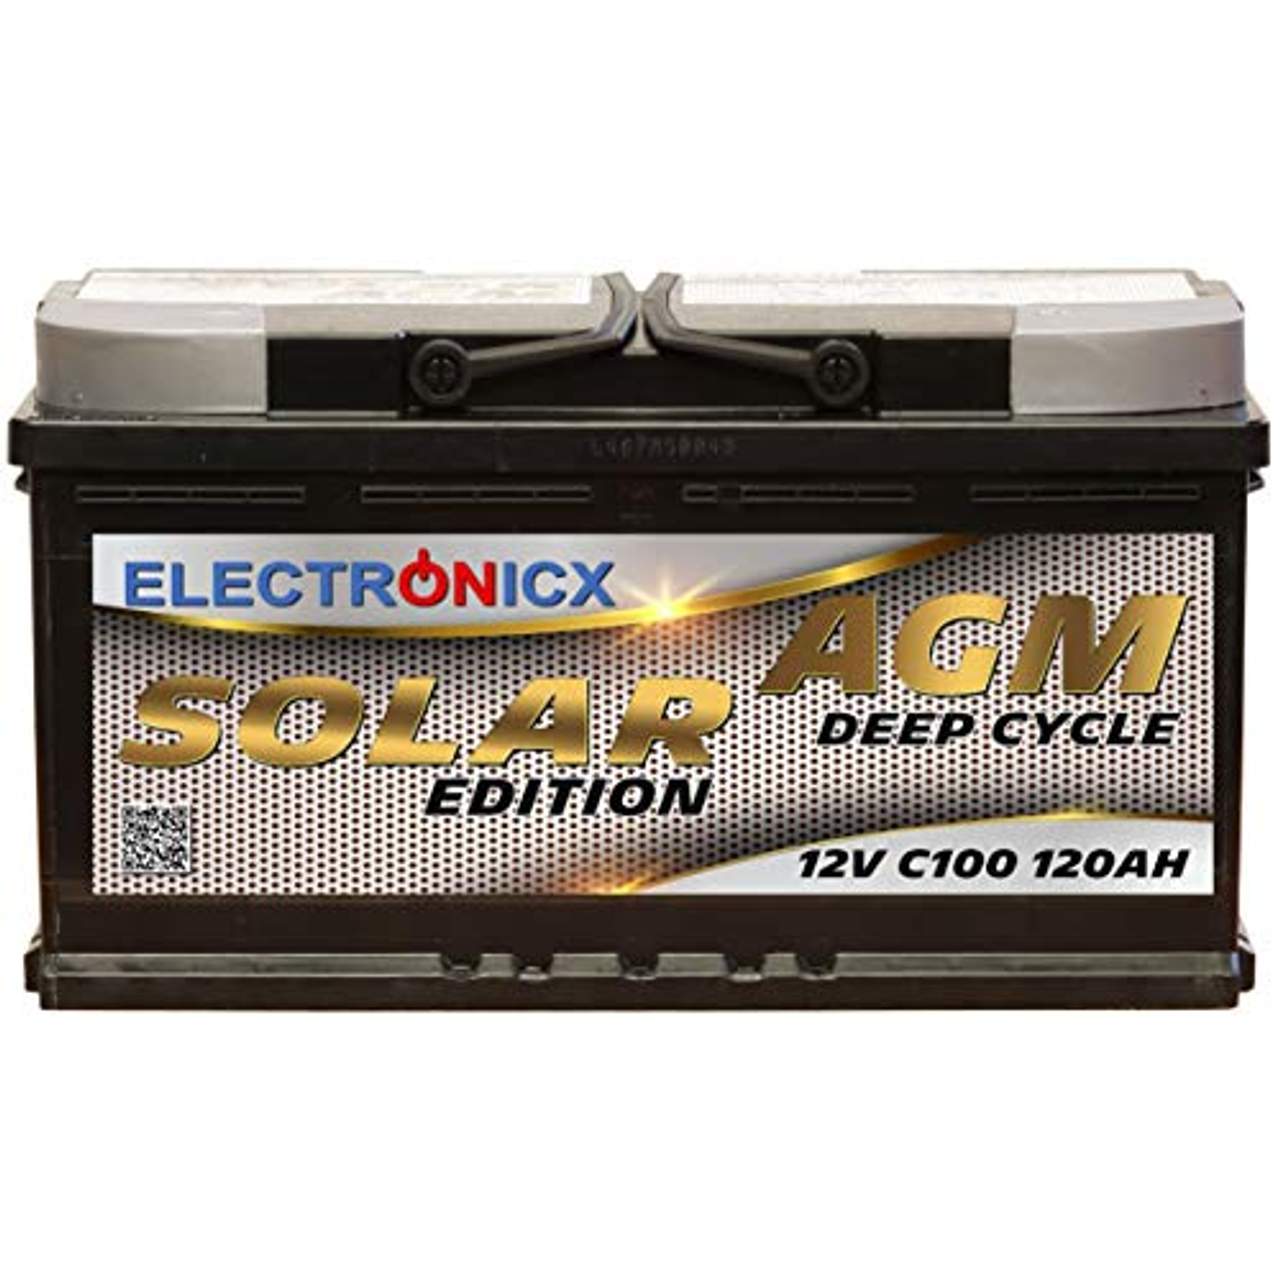 Solarbatterie 12V 120AH Electronicx Solar Edition AGM Batterie Solar Akku